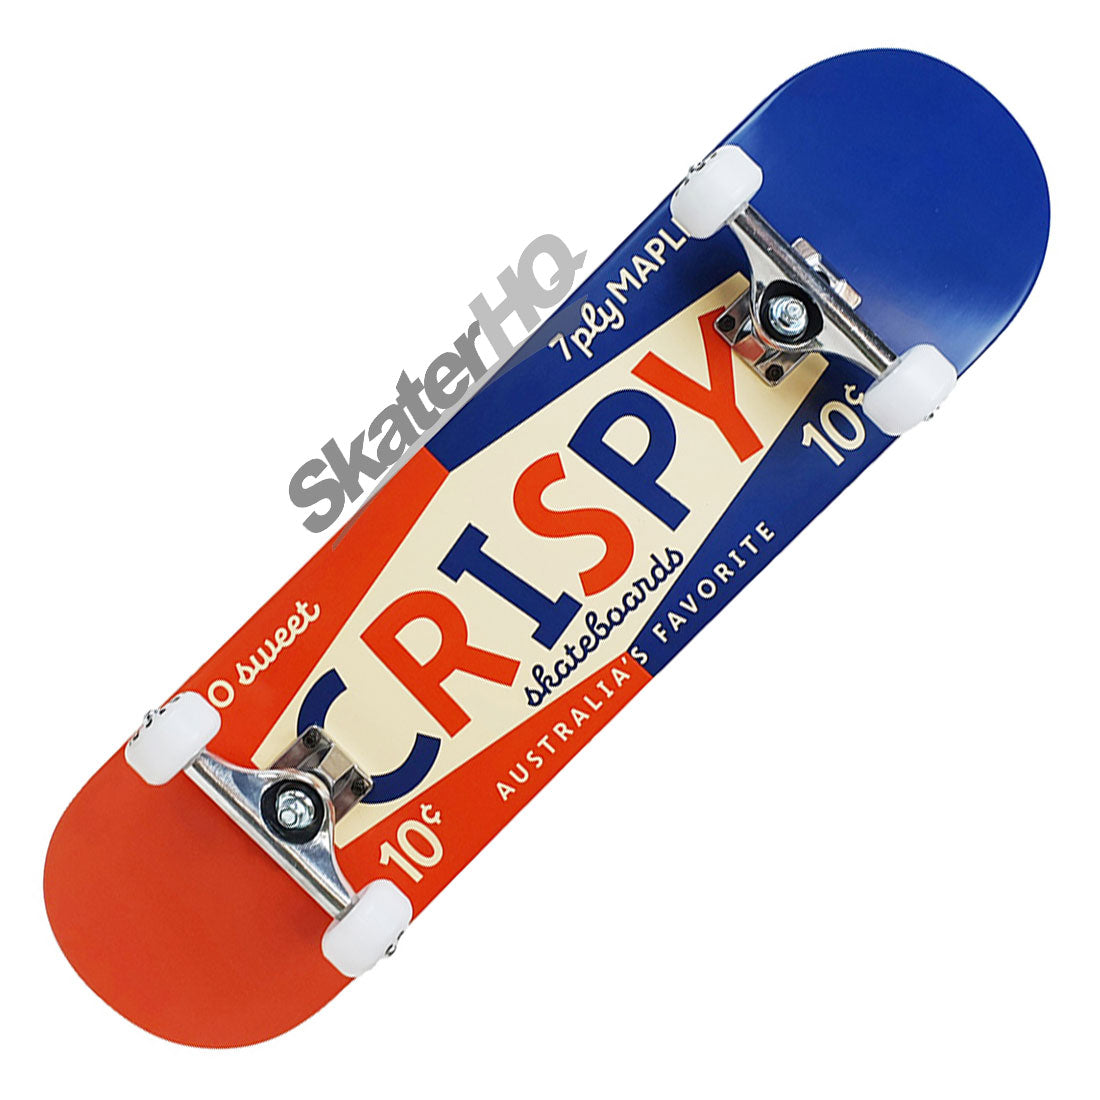 Crispy Rookie So Sweet 8.0 Complete - Red/Blue Skateboard Completes Modern Street